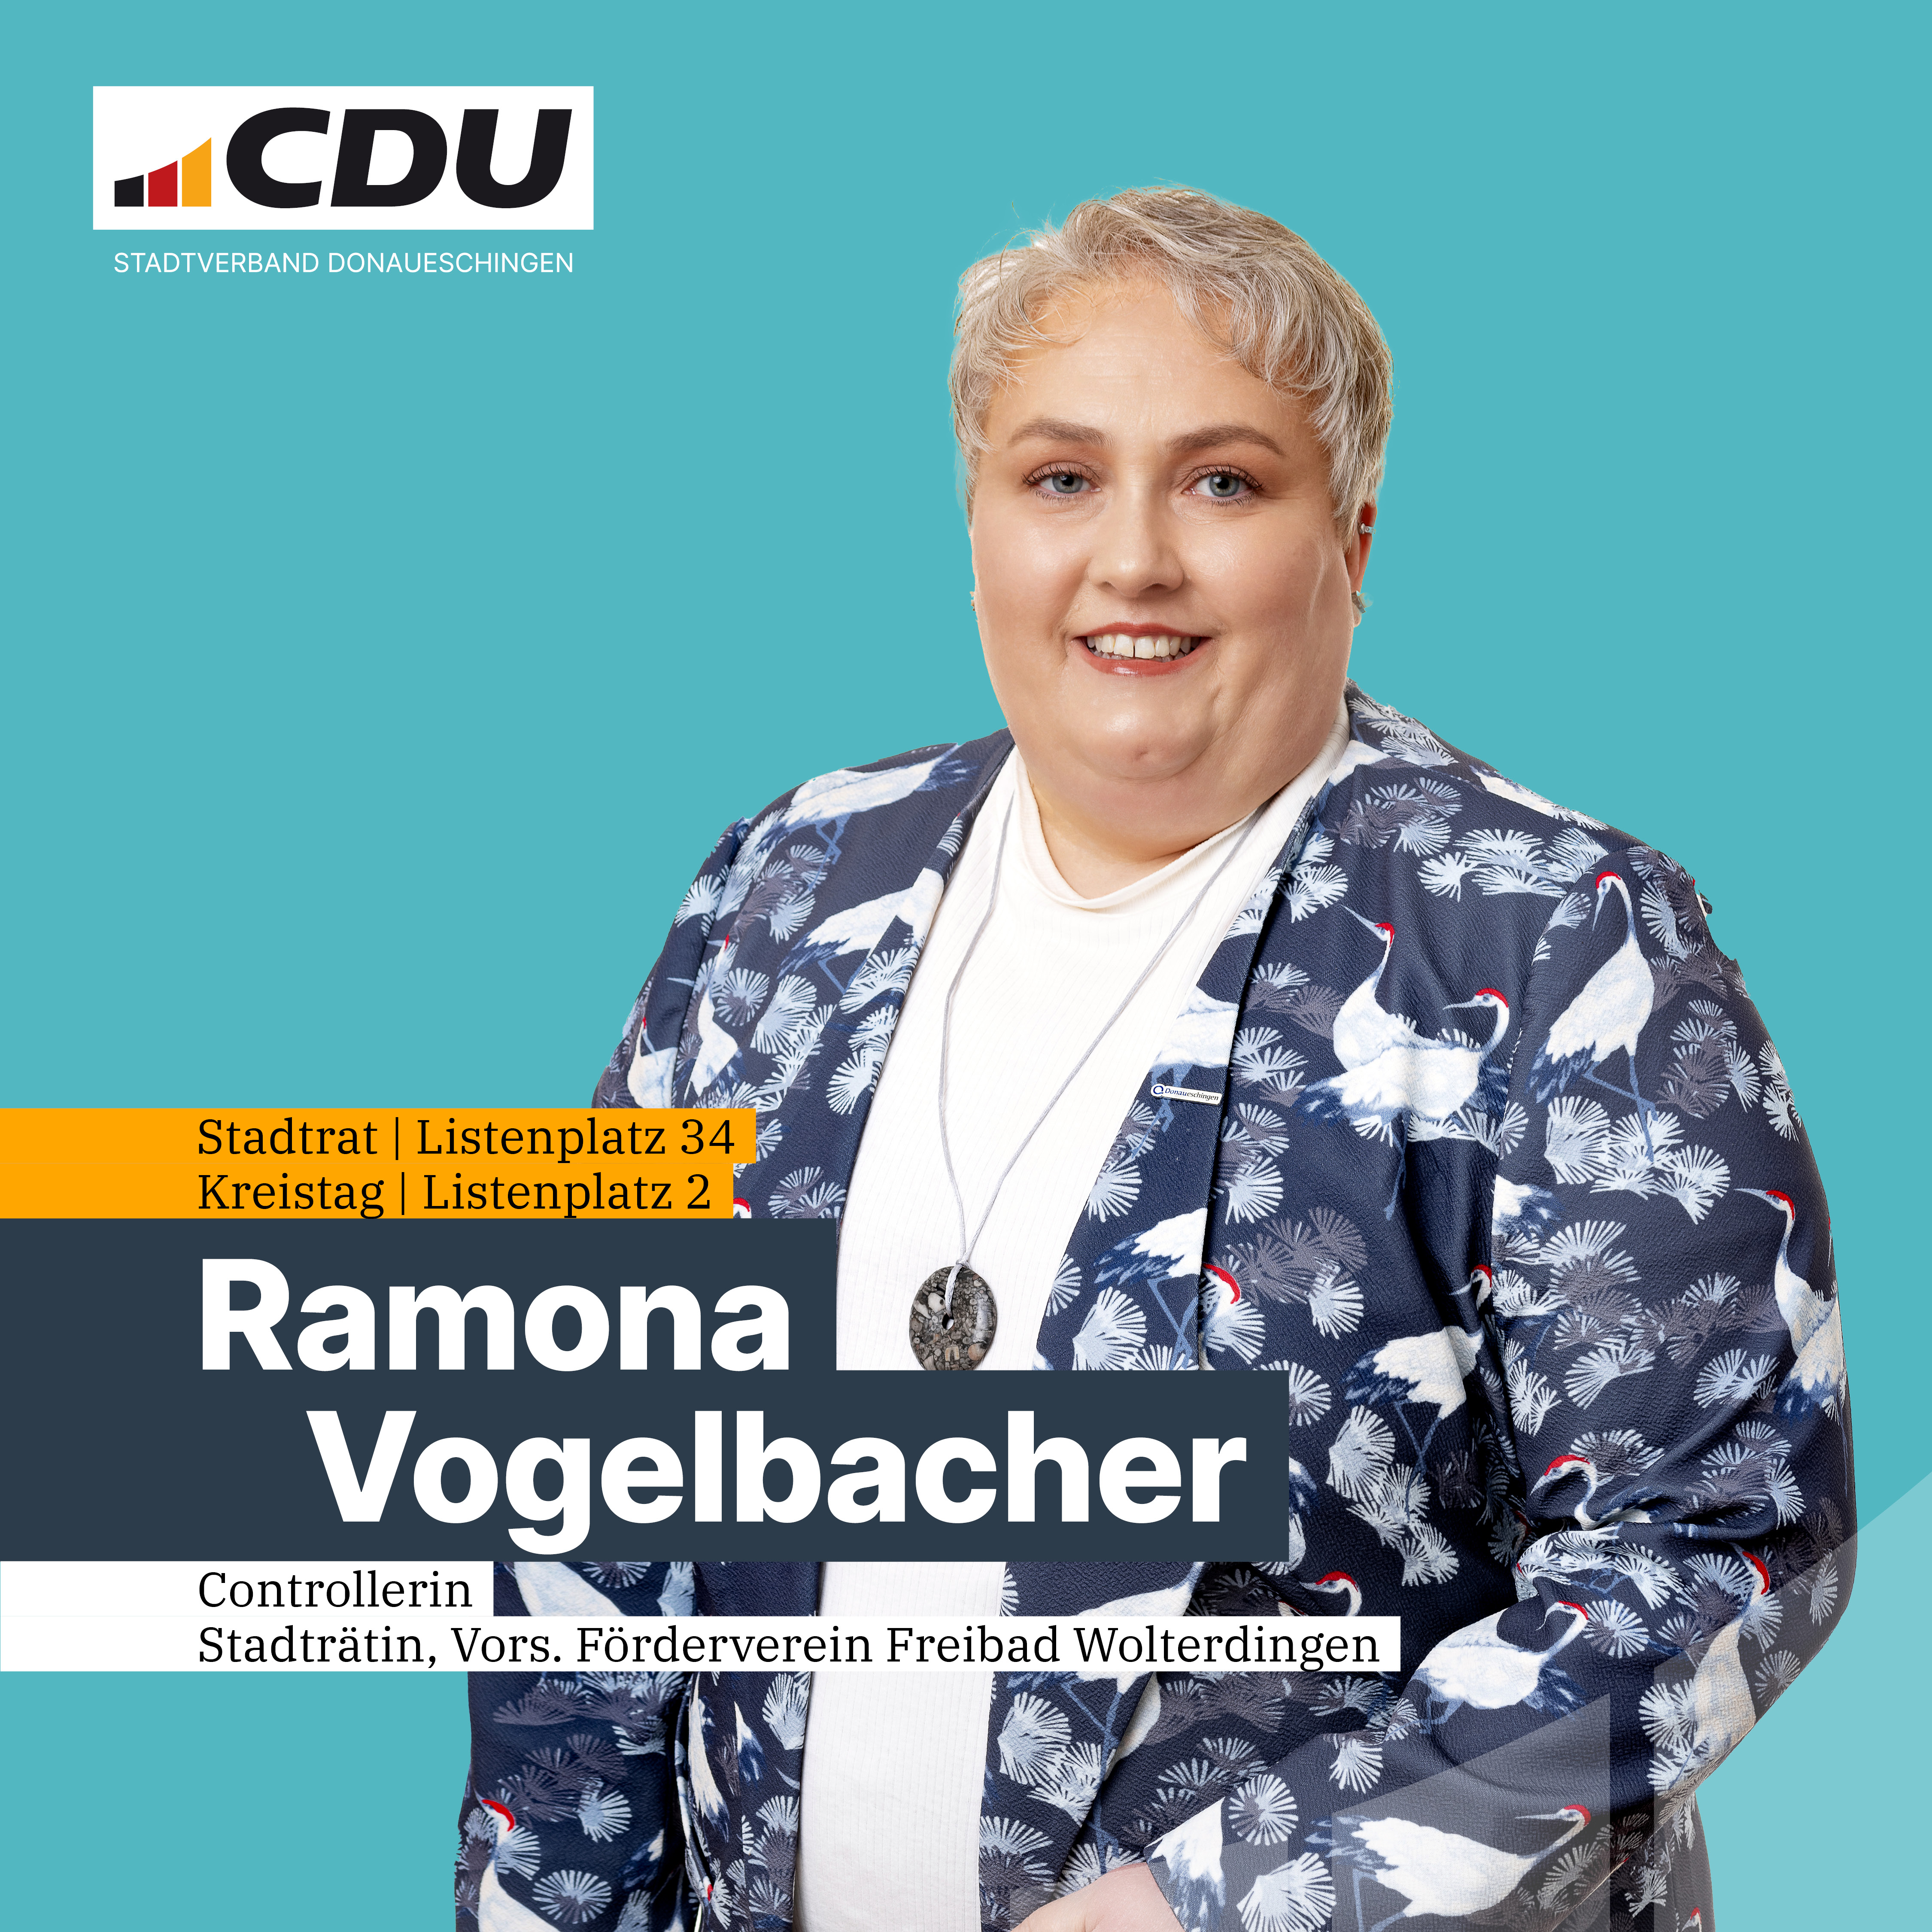  Ramona Vogelbacher